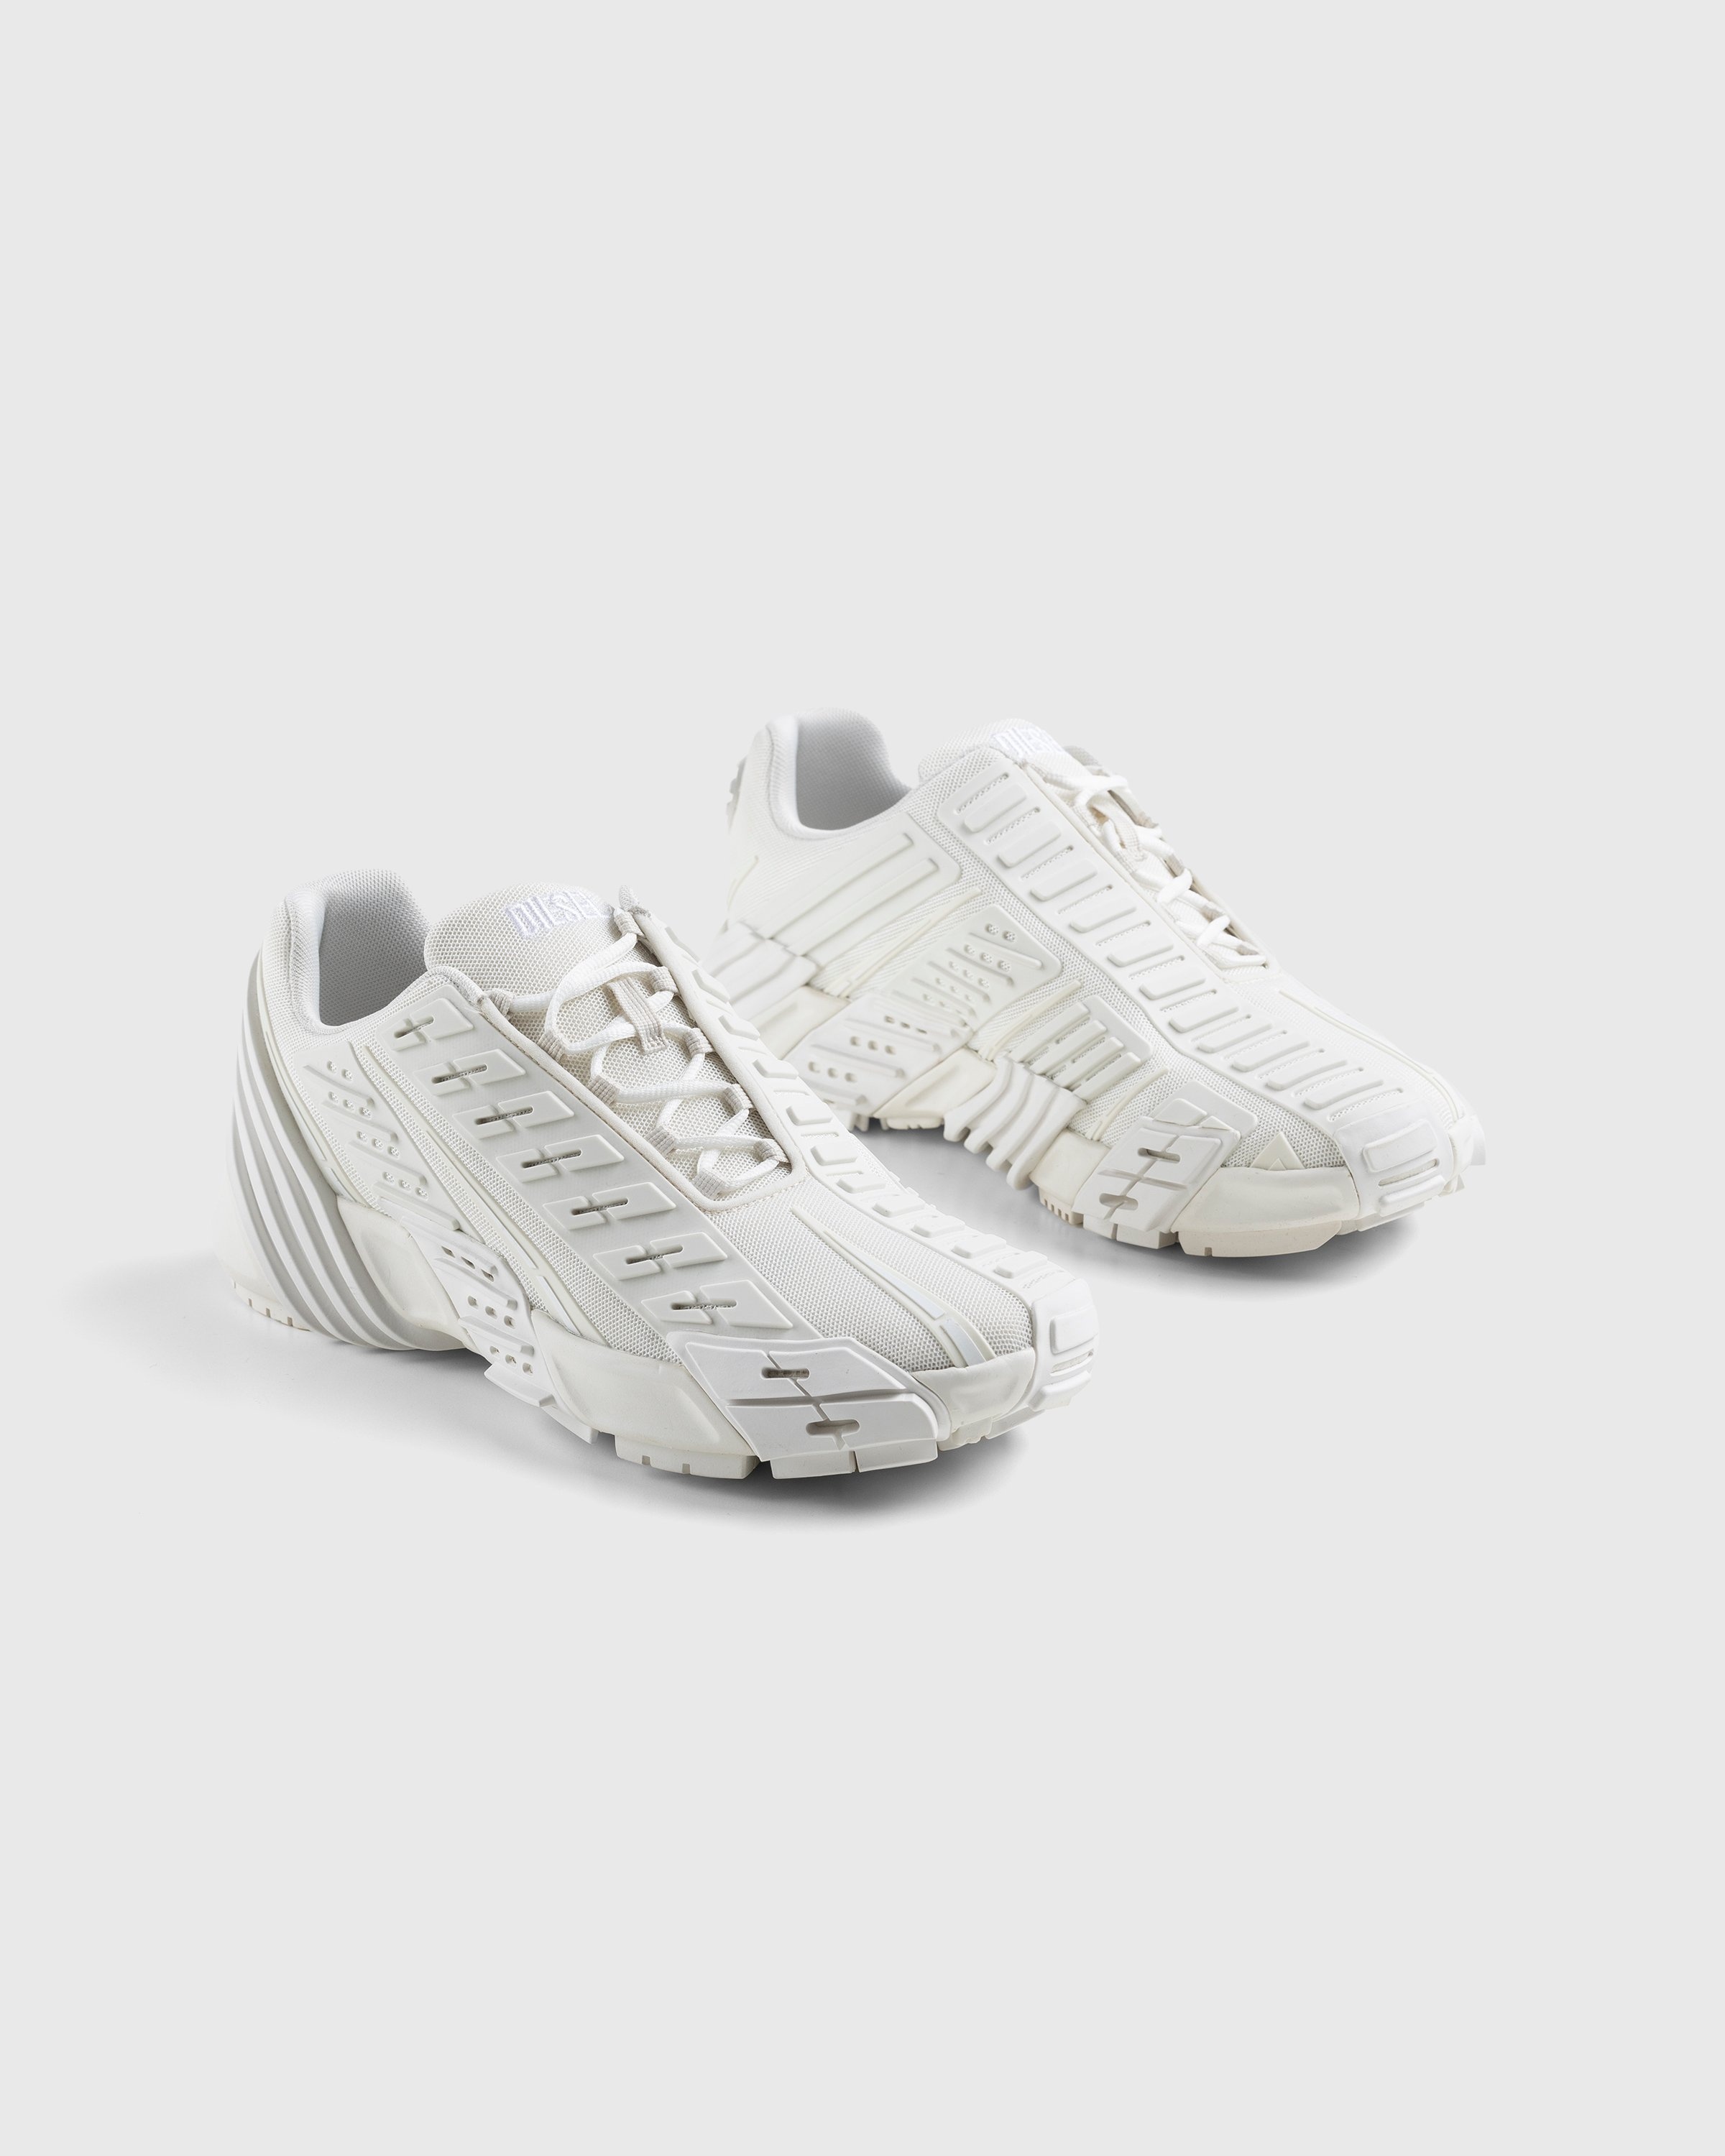 Diesel – S-Prototype Low Sneakers White | Highsnobiety Shop